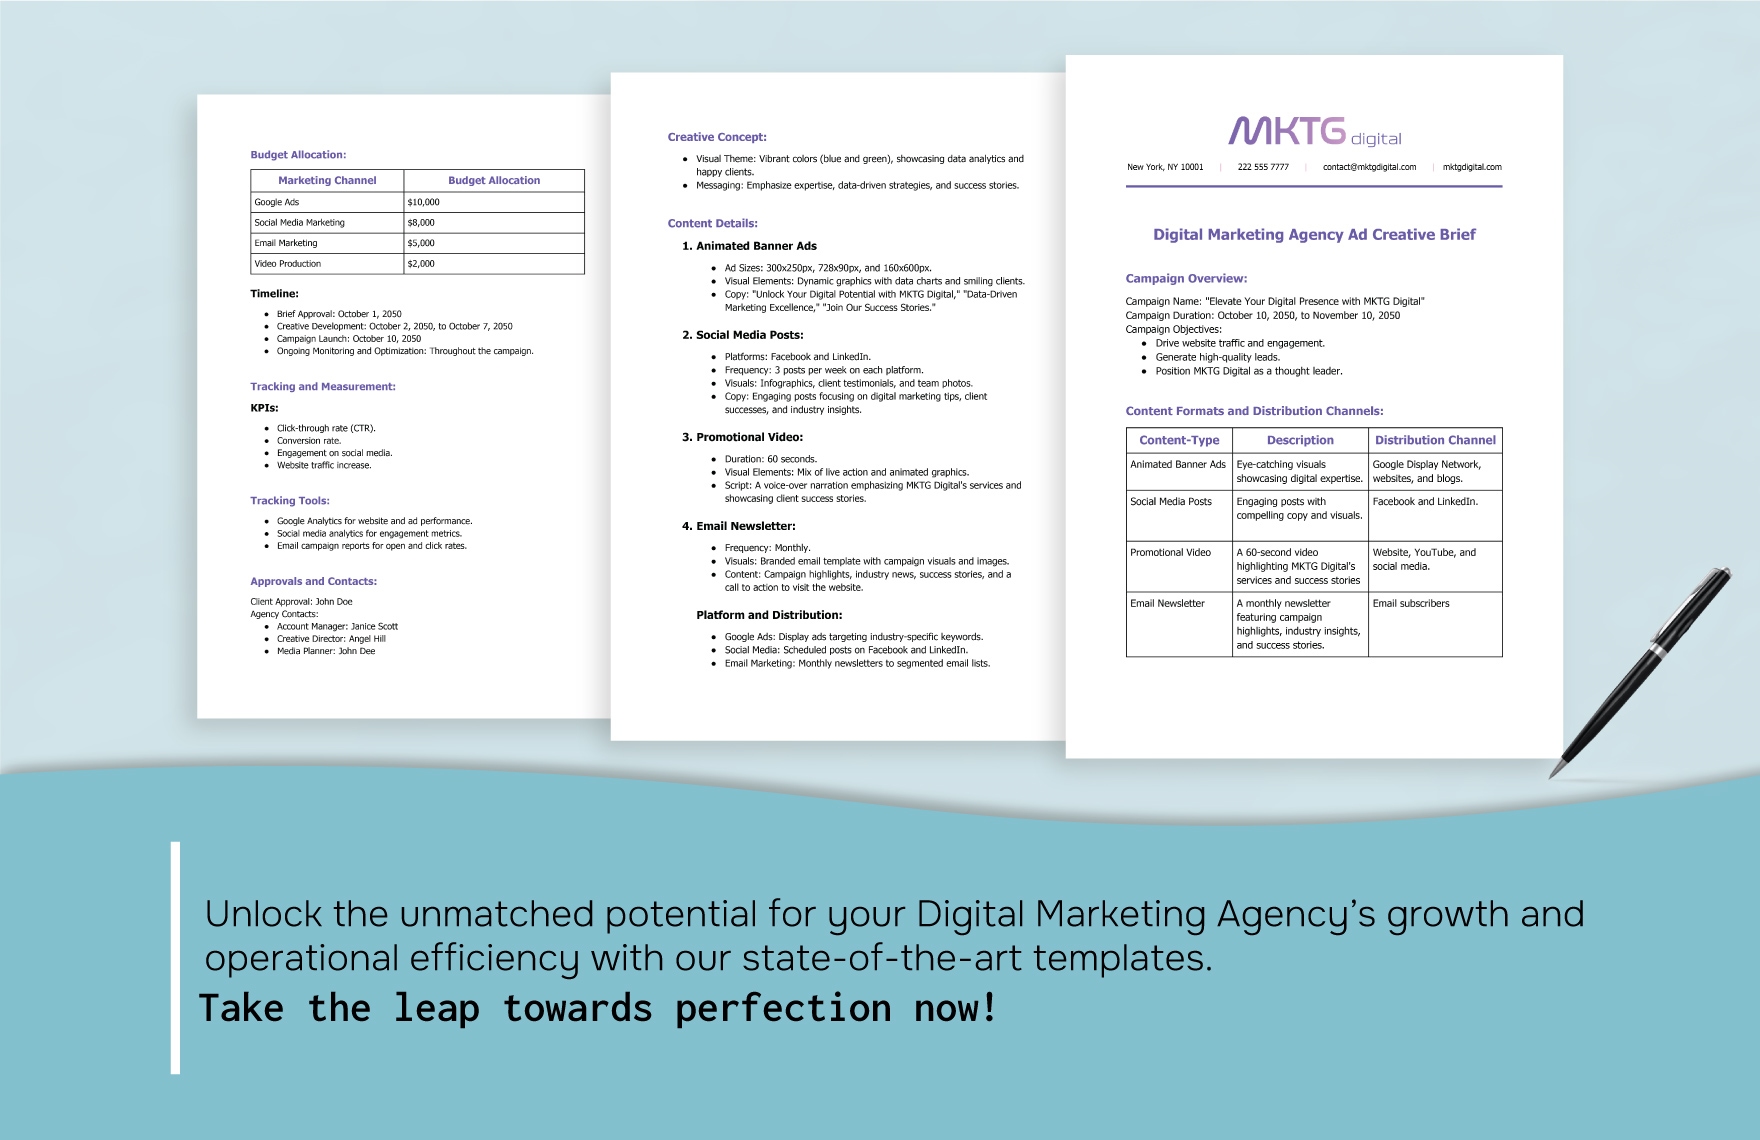 Digital Marketing Agency Ad Creative Brief Template